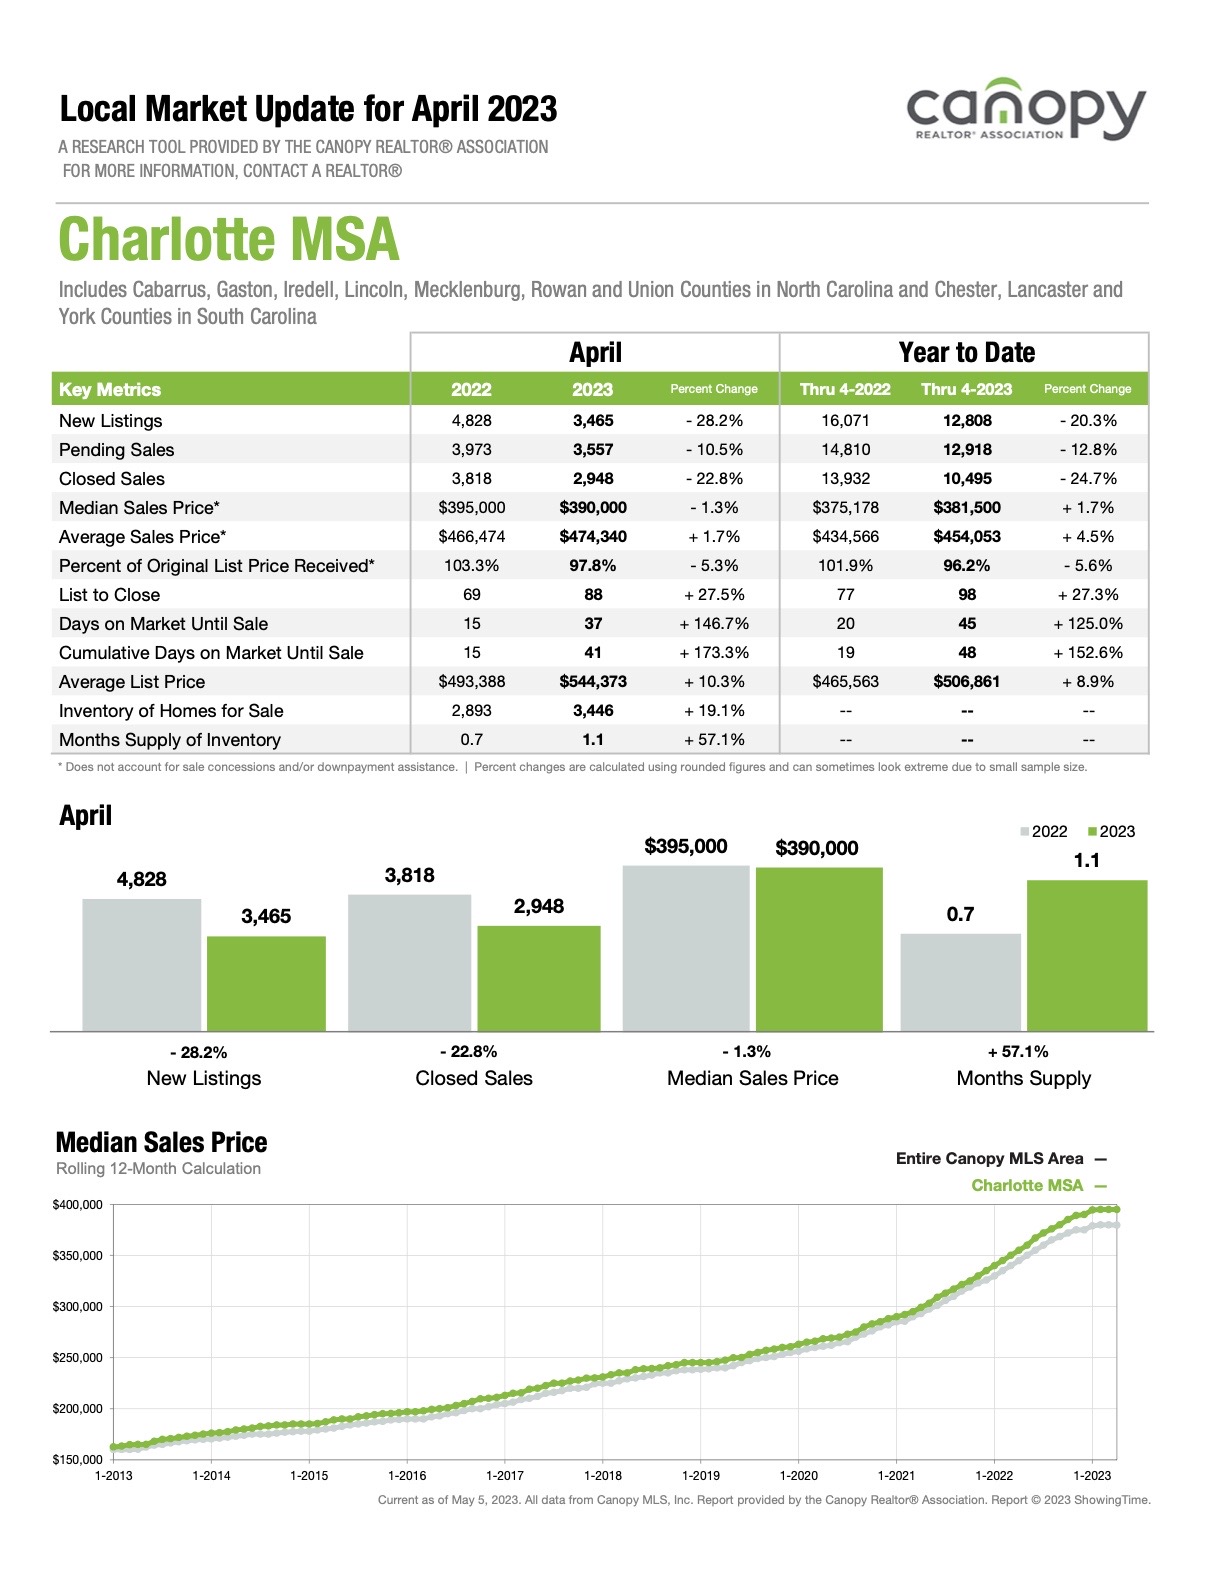 Charlotte MSA Local Market Update for April 2023